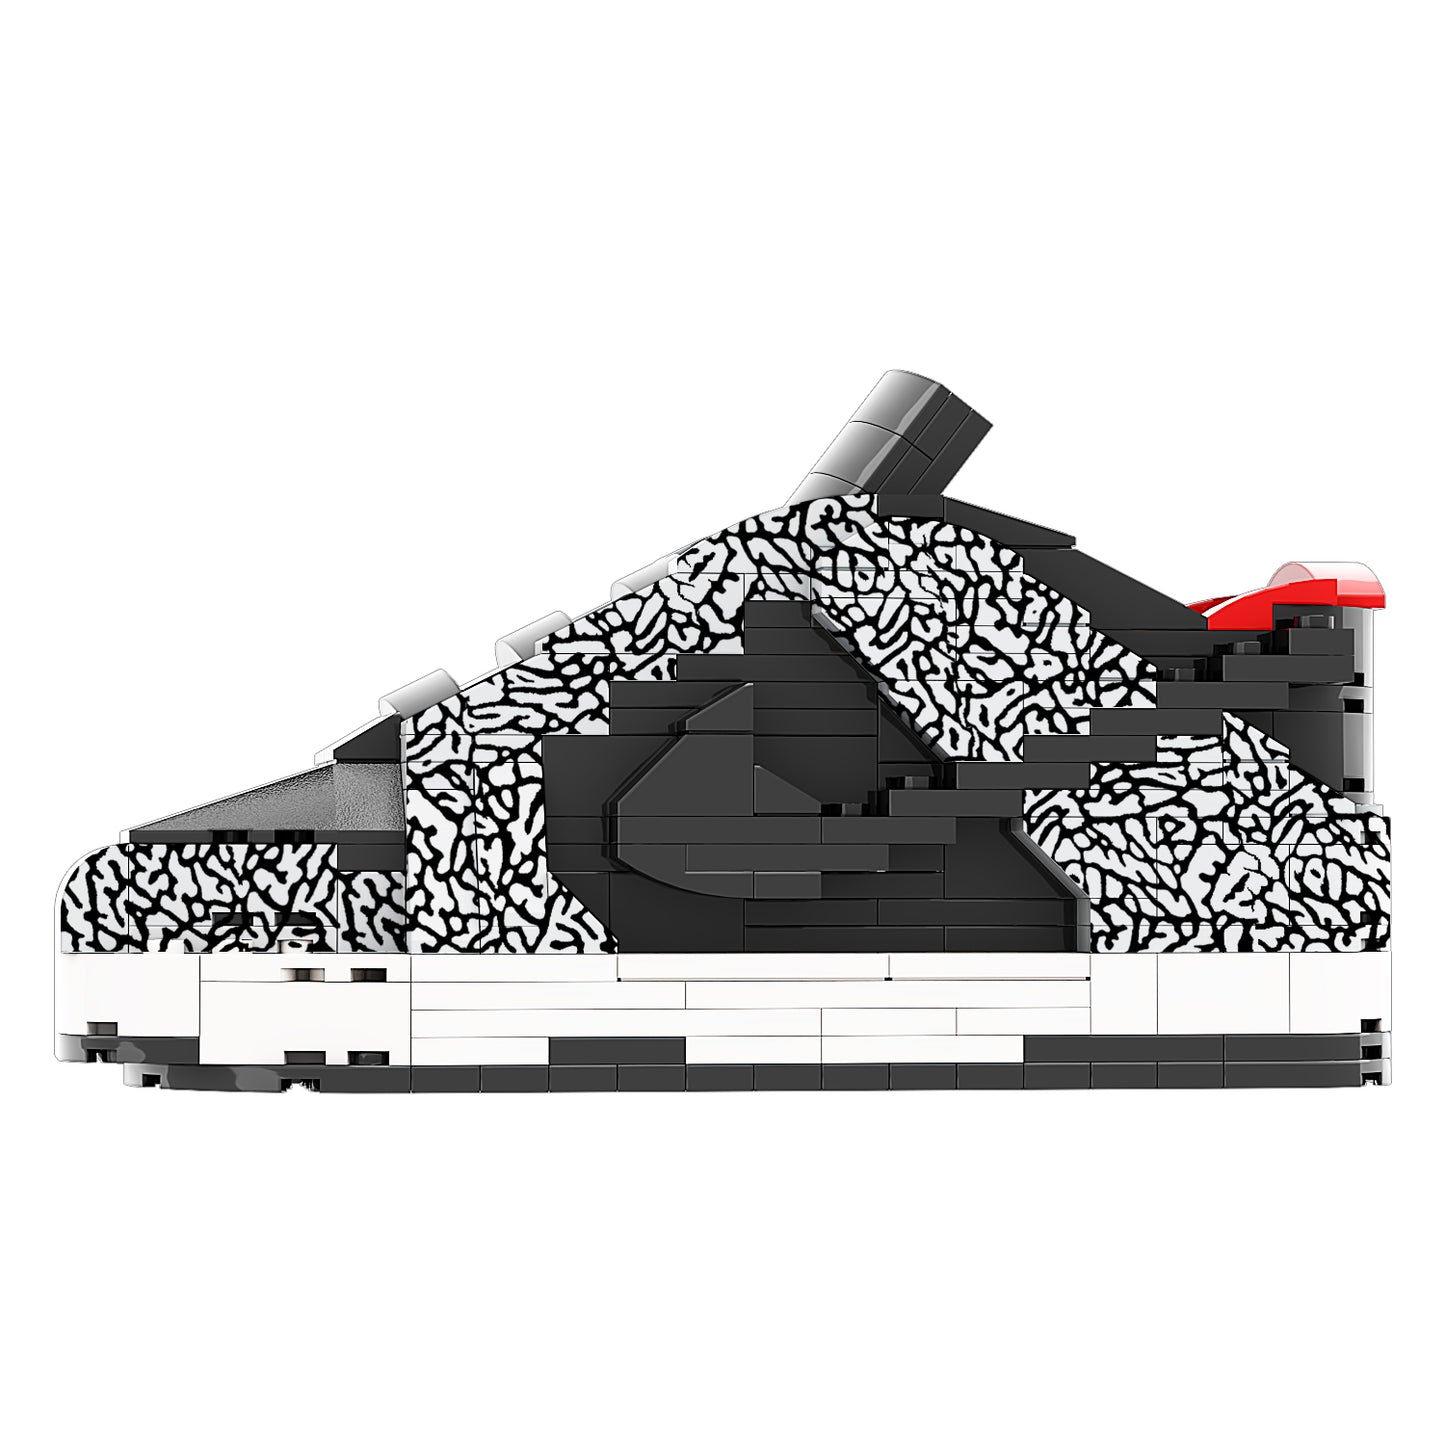 REGULAR SB Dunk SUP "Black Cement" Sneaker Bricks with Mini Figure